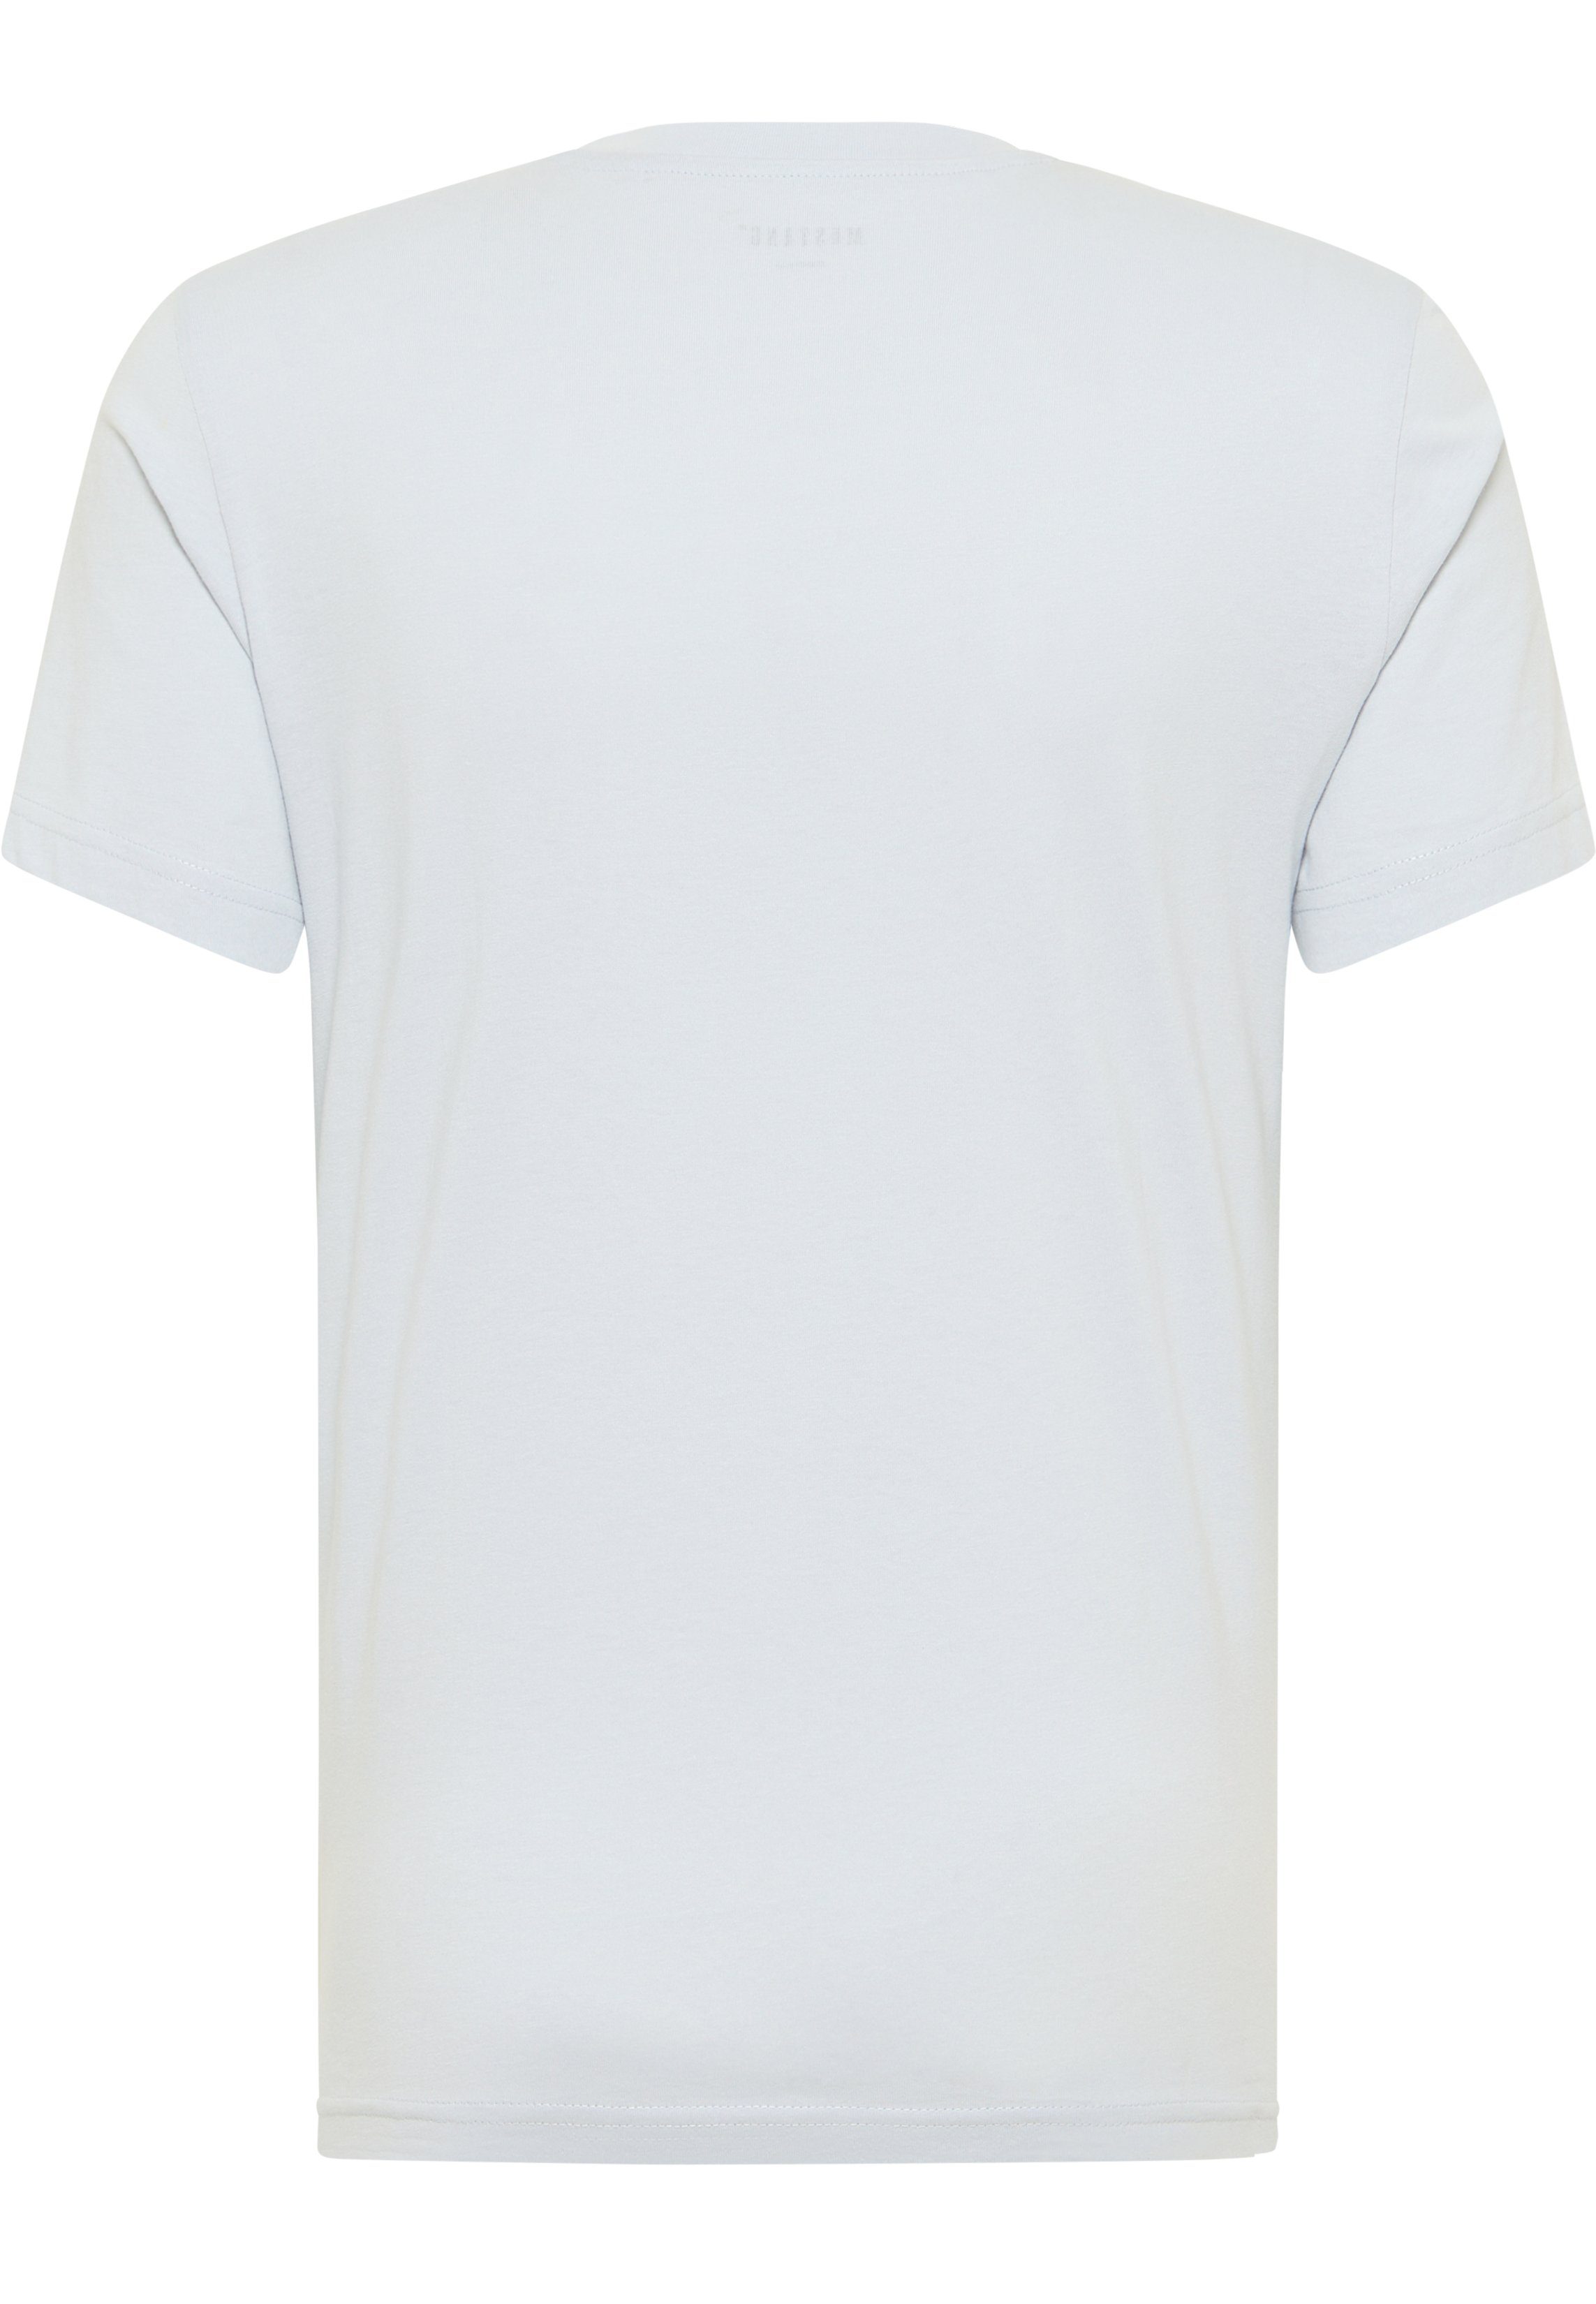 hellblau T-Shirt Style Alex MUSTANG C Print